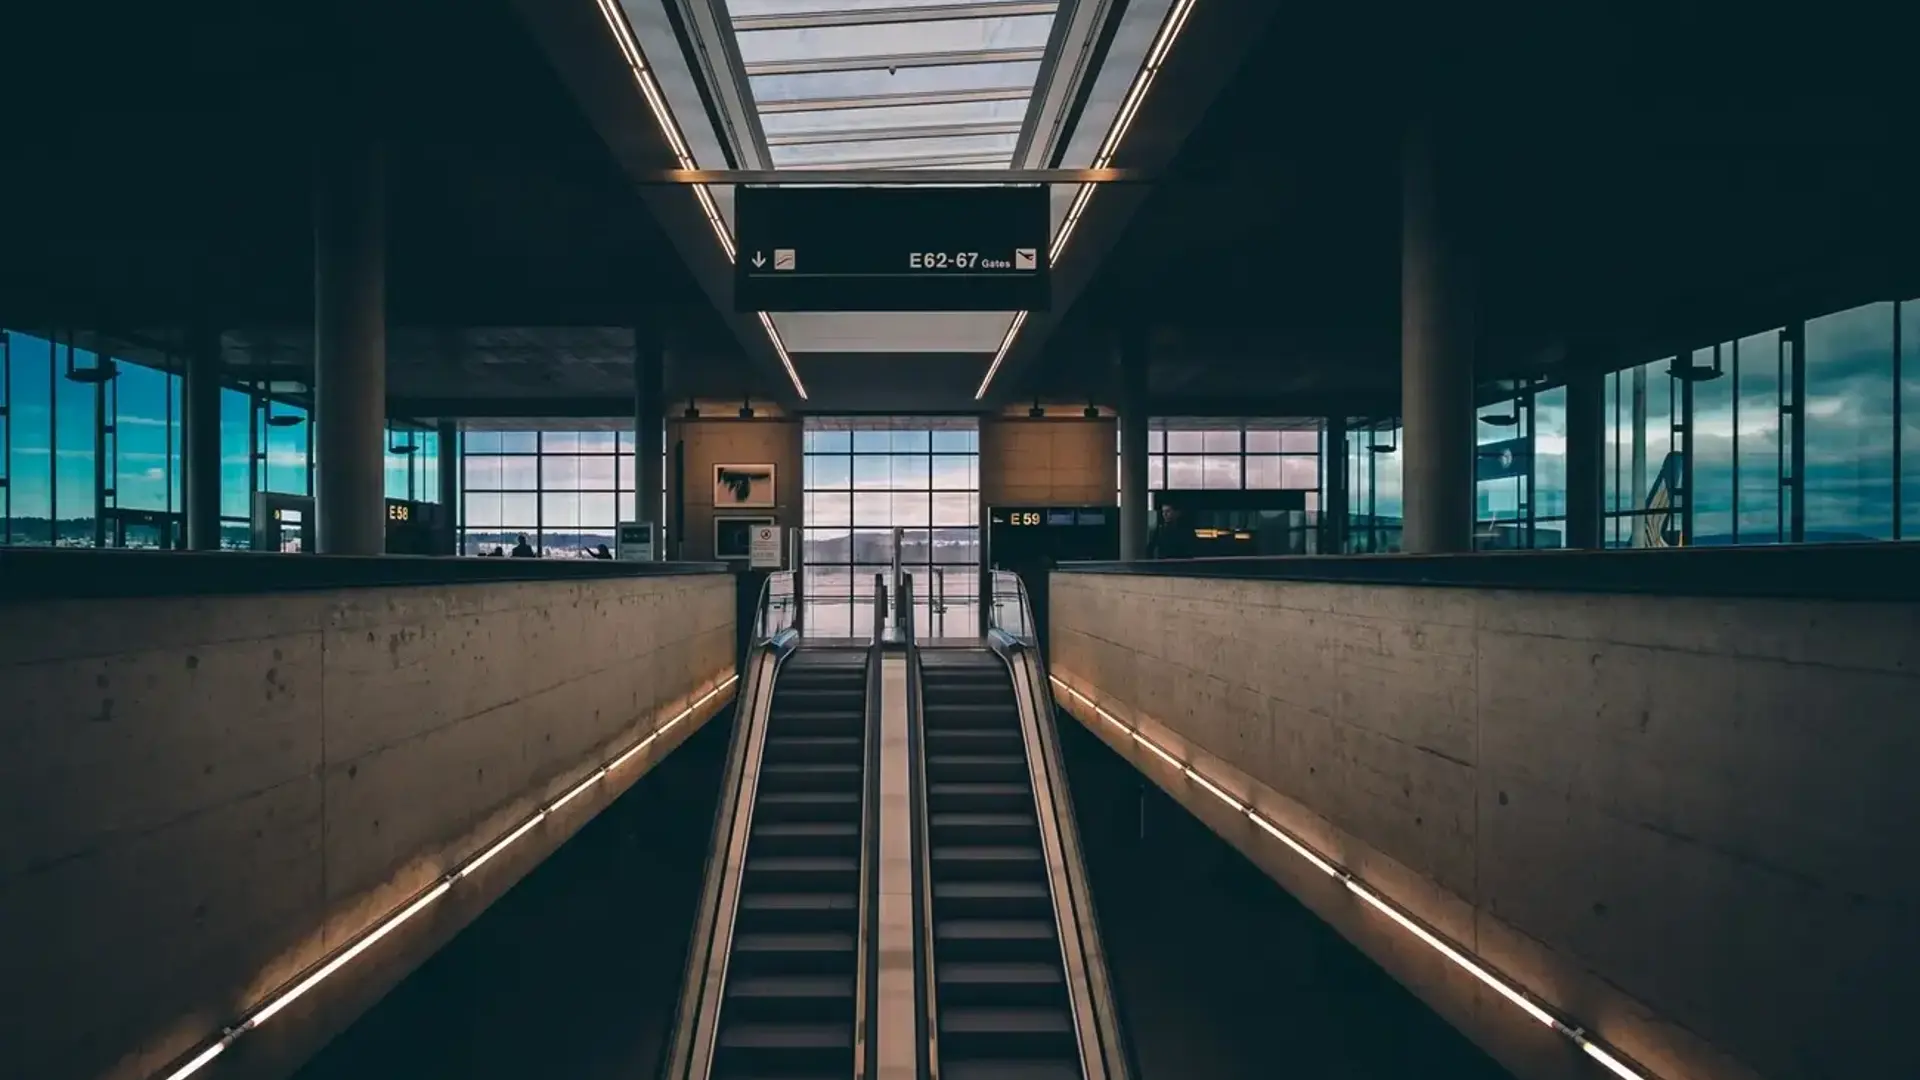 Escalators in airport